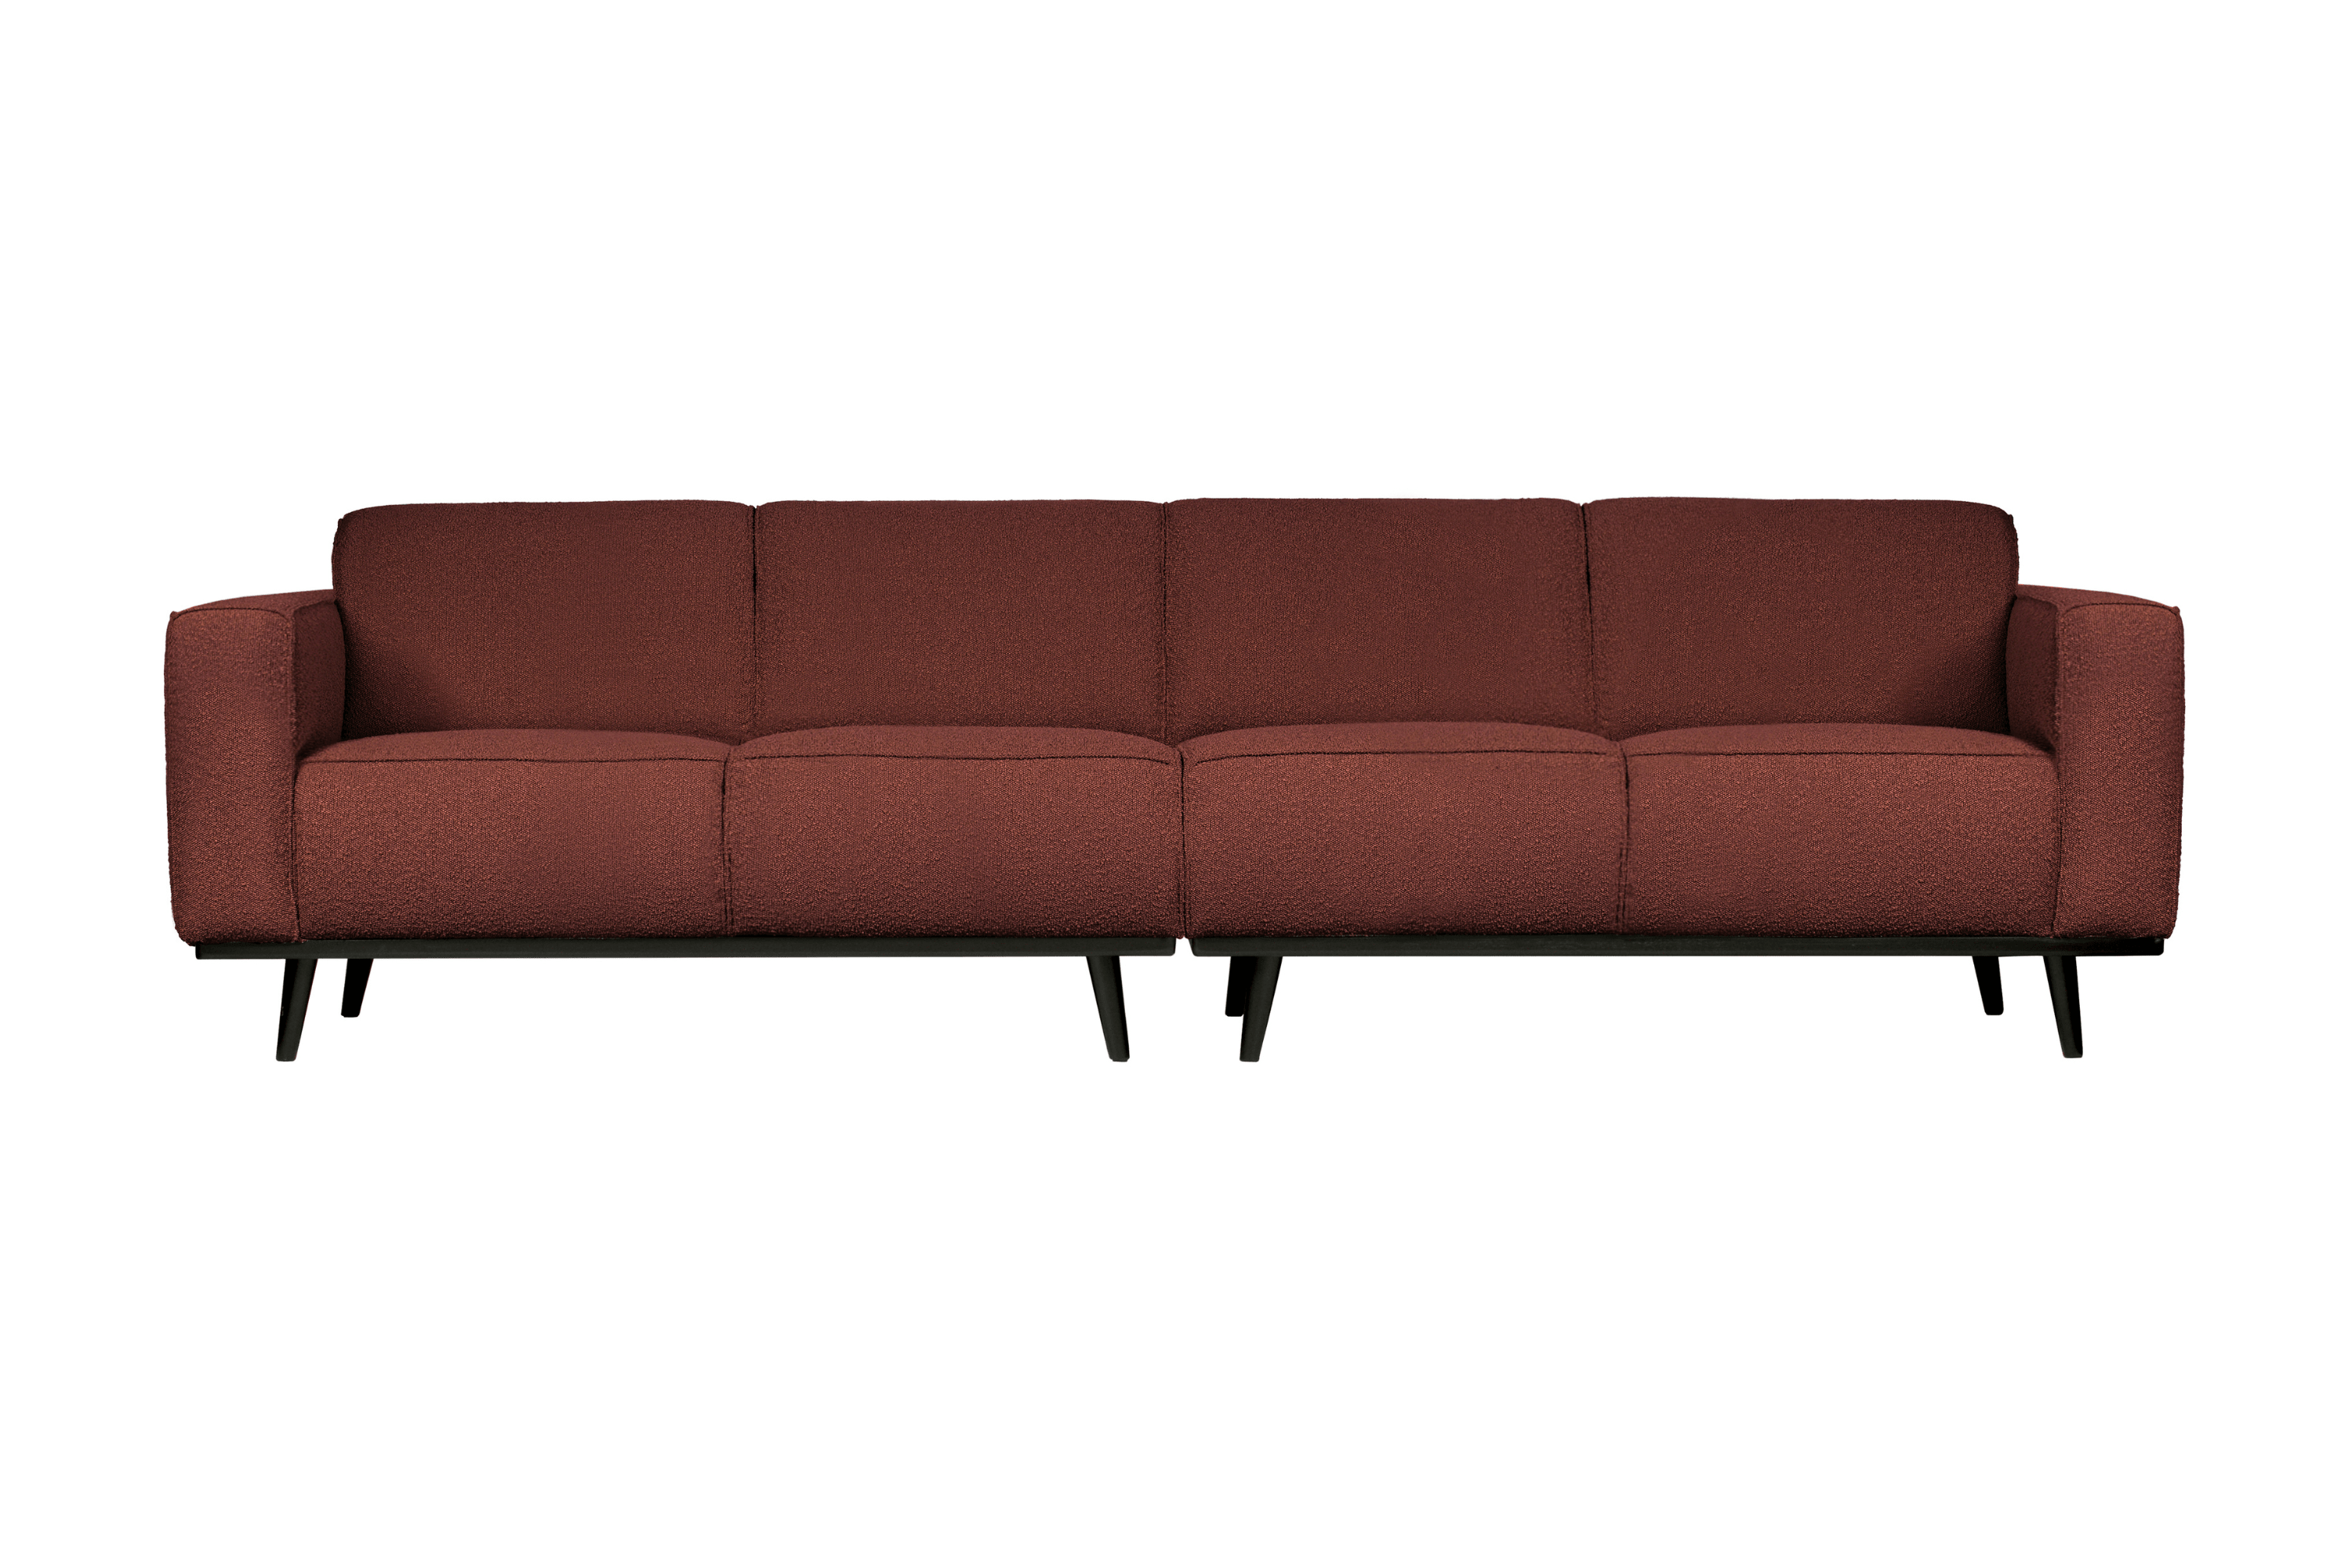 Sofa 4-osobowa STATEMENT boucle kasztanowy Be Pure 280 cm   Eye on Design